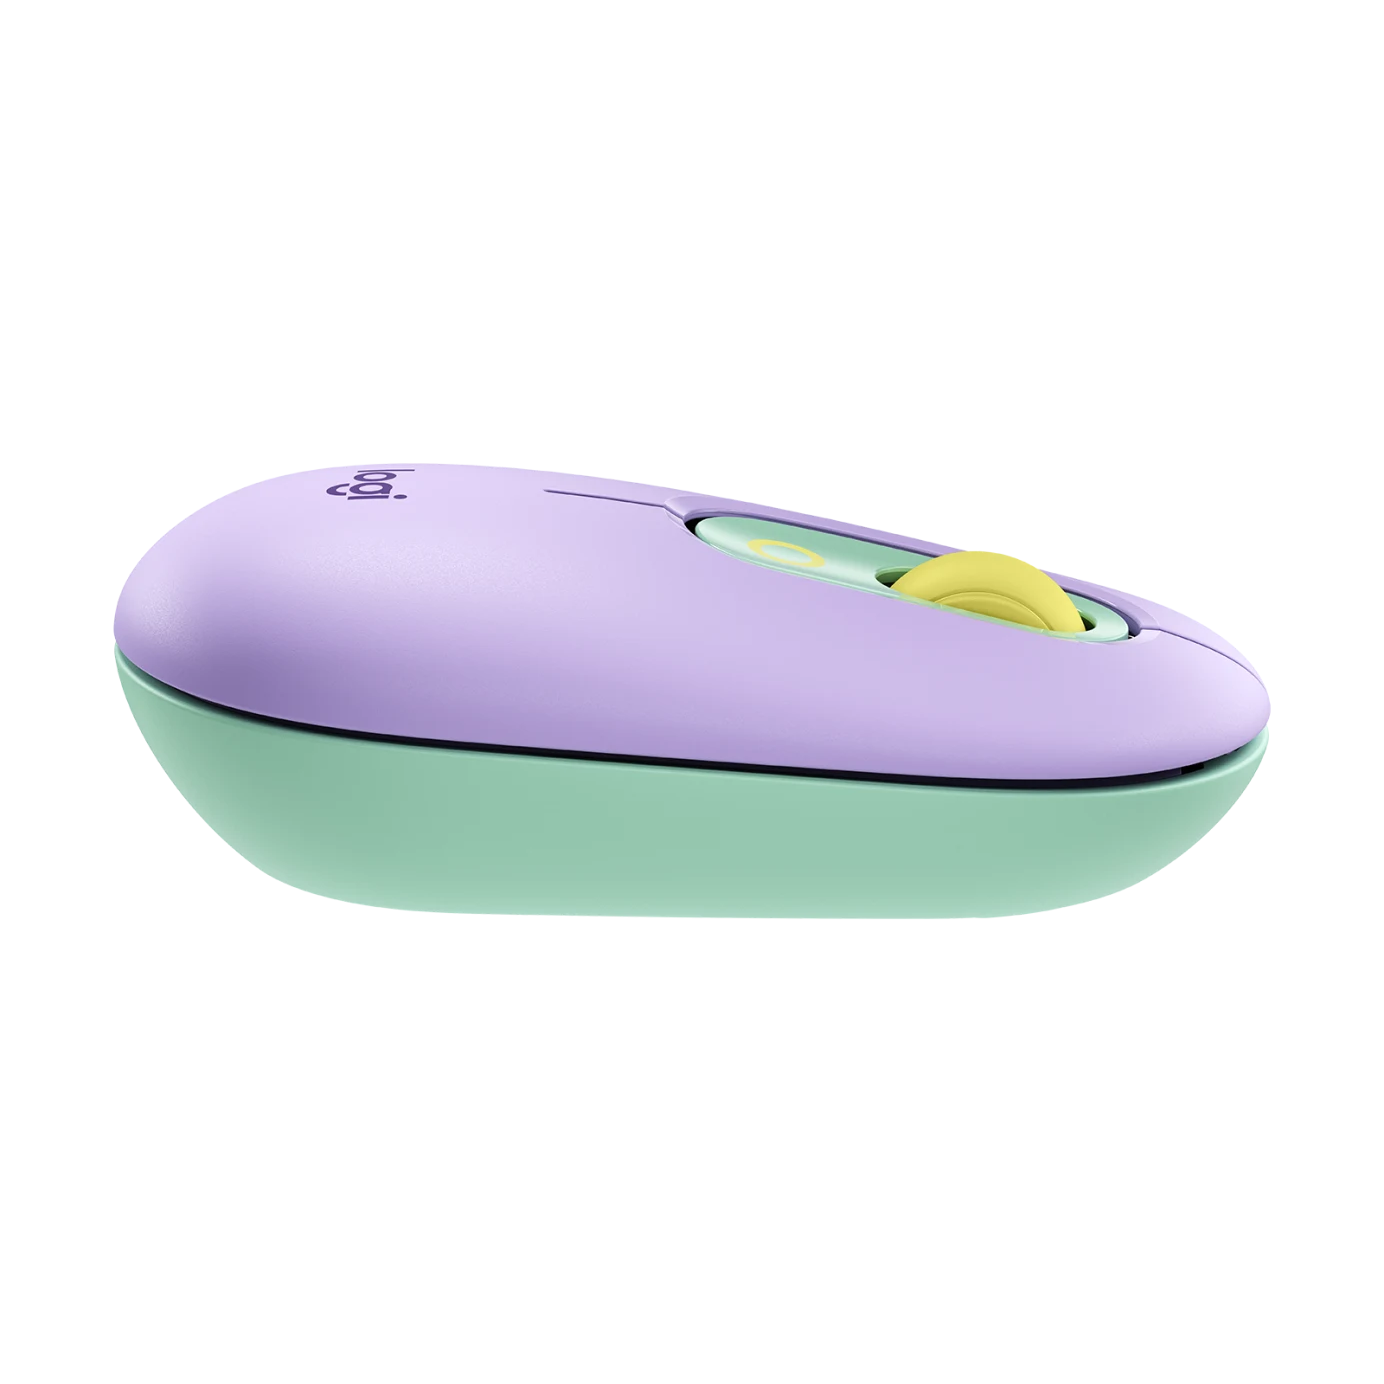 Logitech Pop Wireless Mouse with Emoji | Daydream